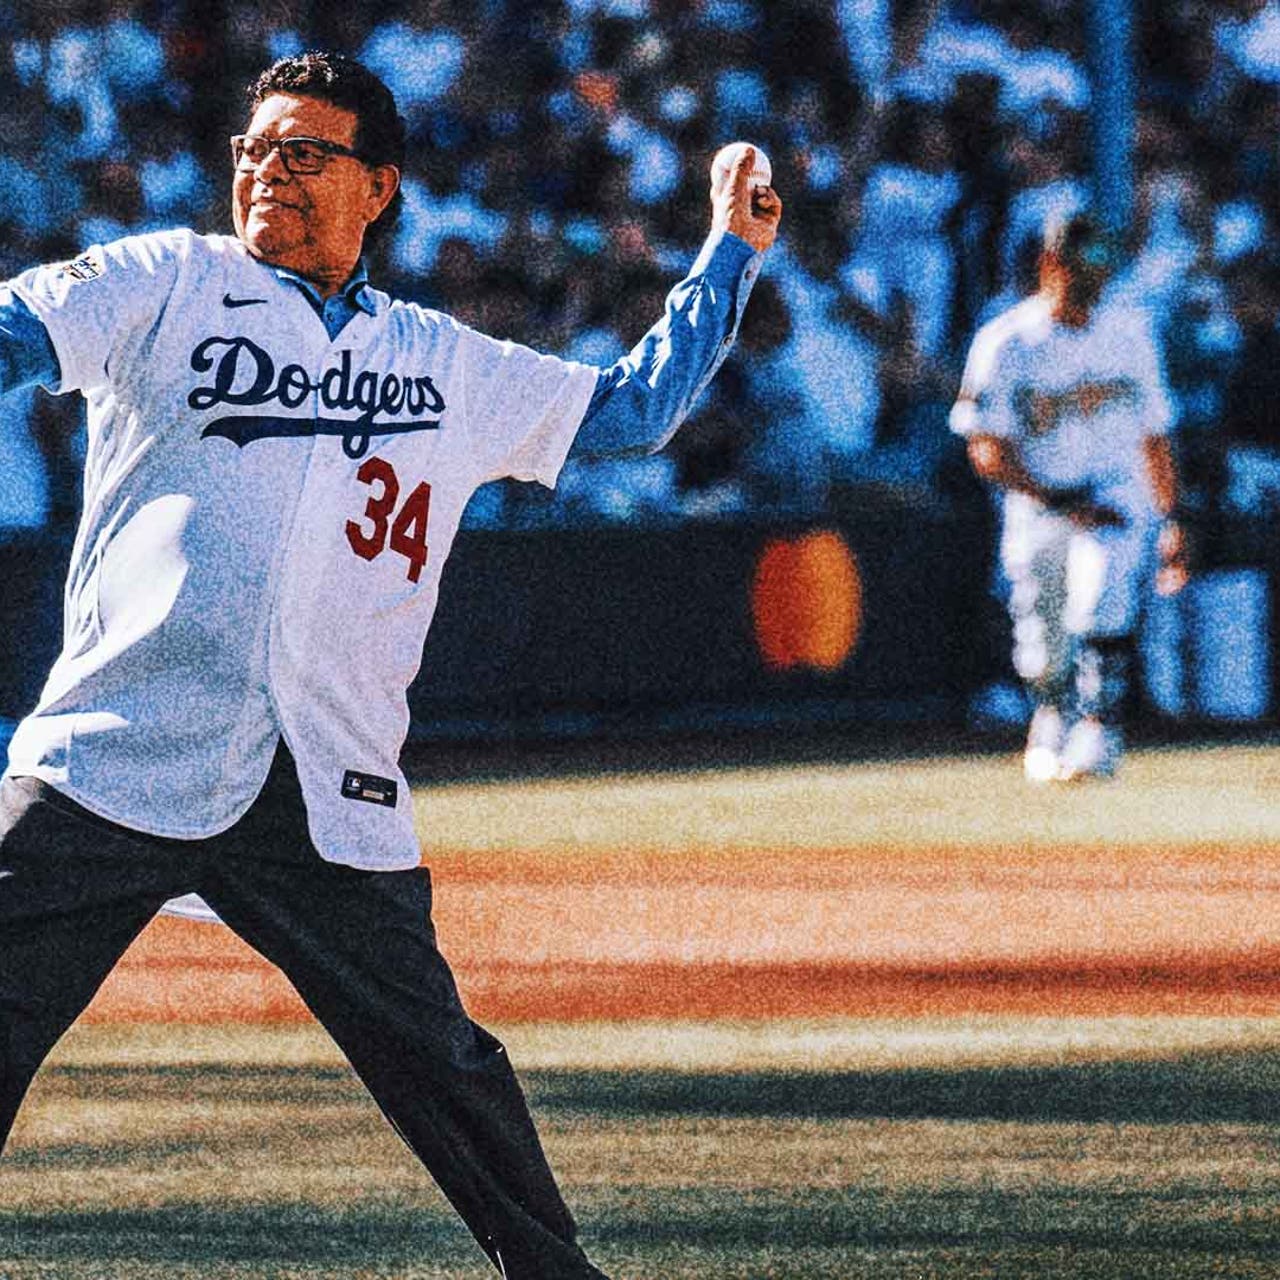 Dodgers to retire Fernando Valenzuela's No. 34 jersey number – NBC